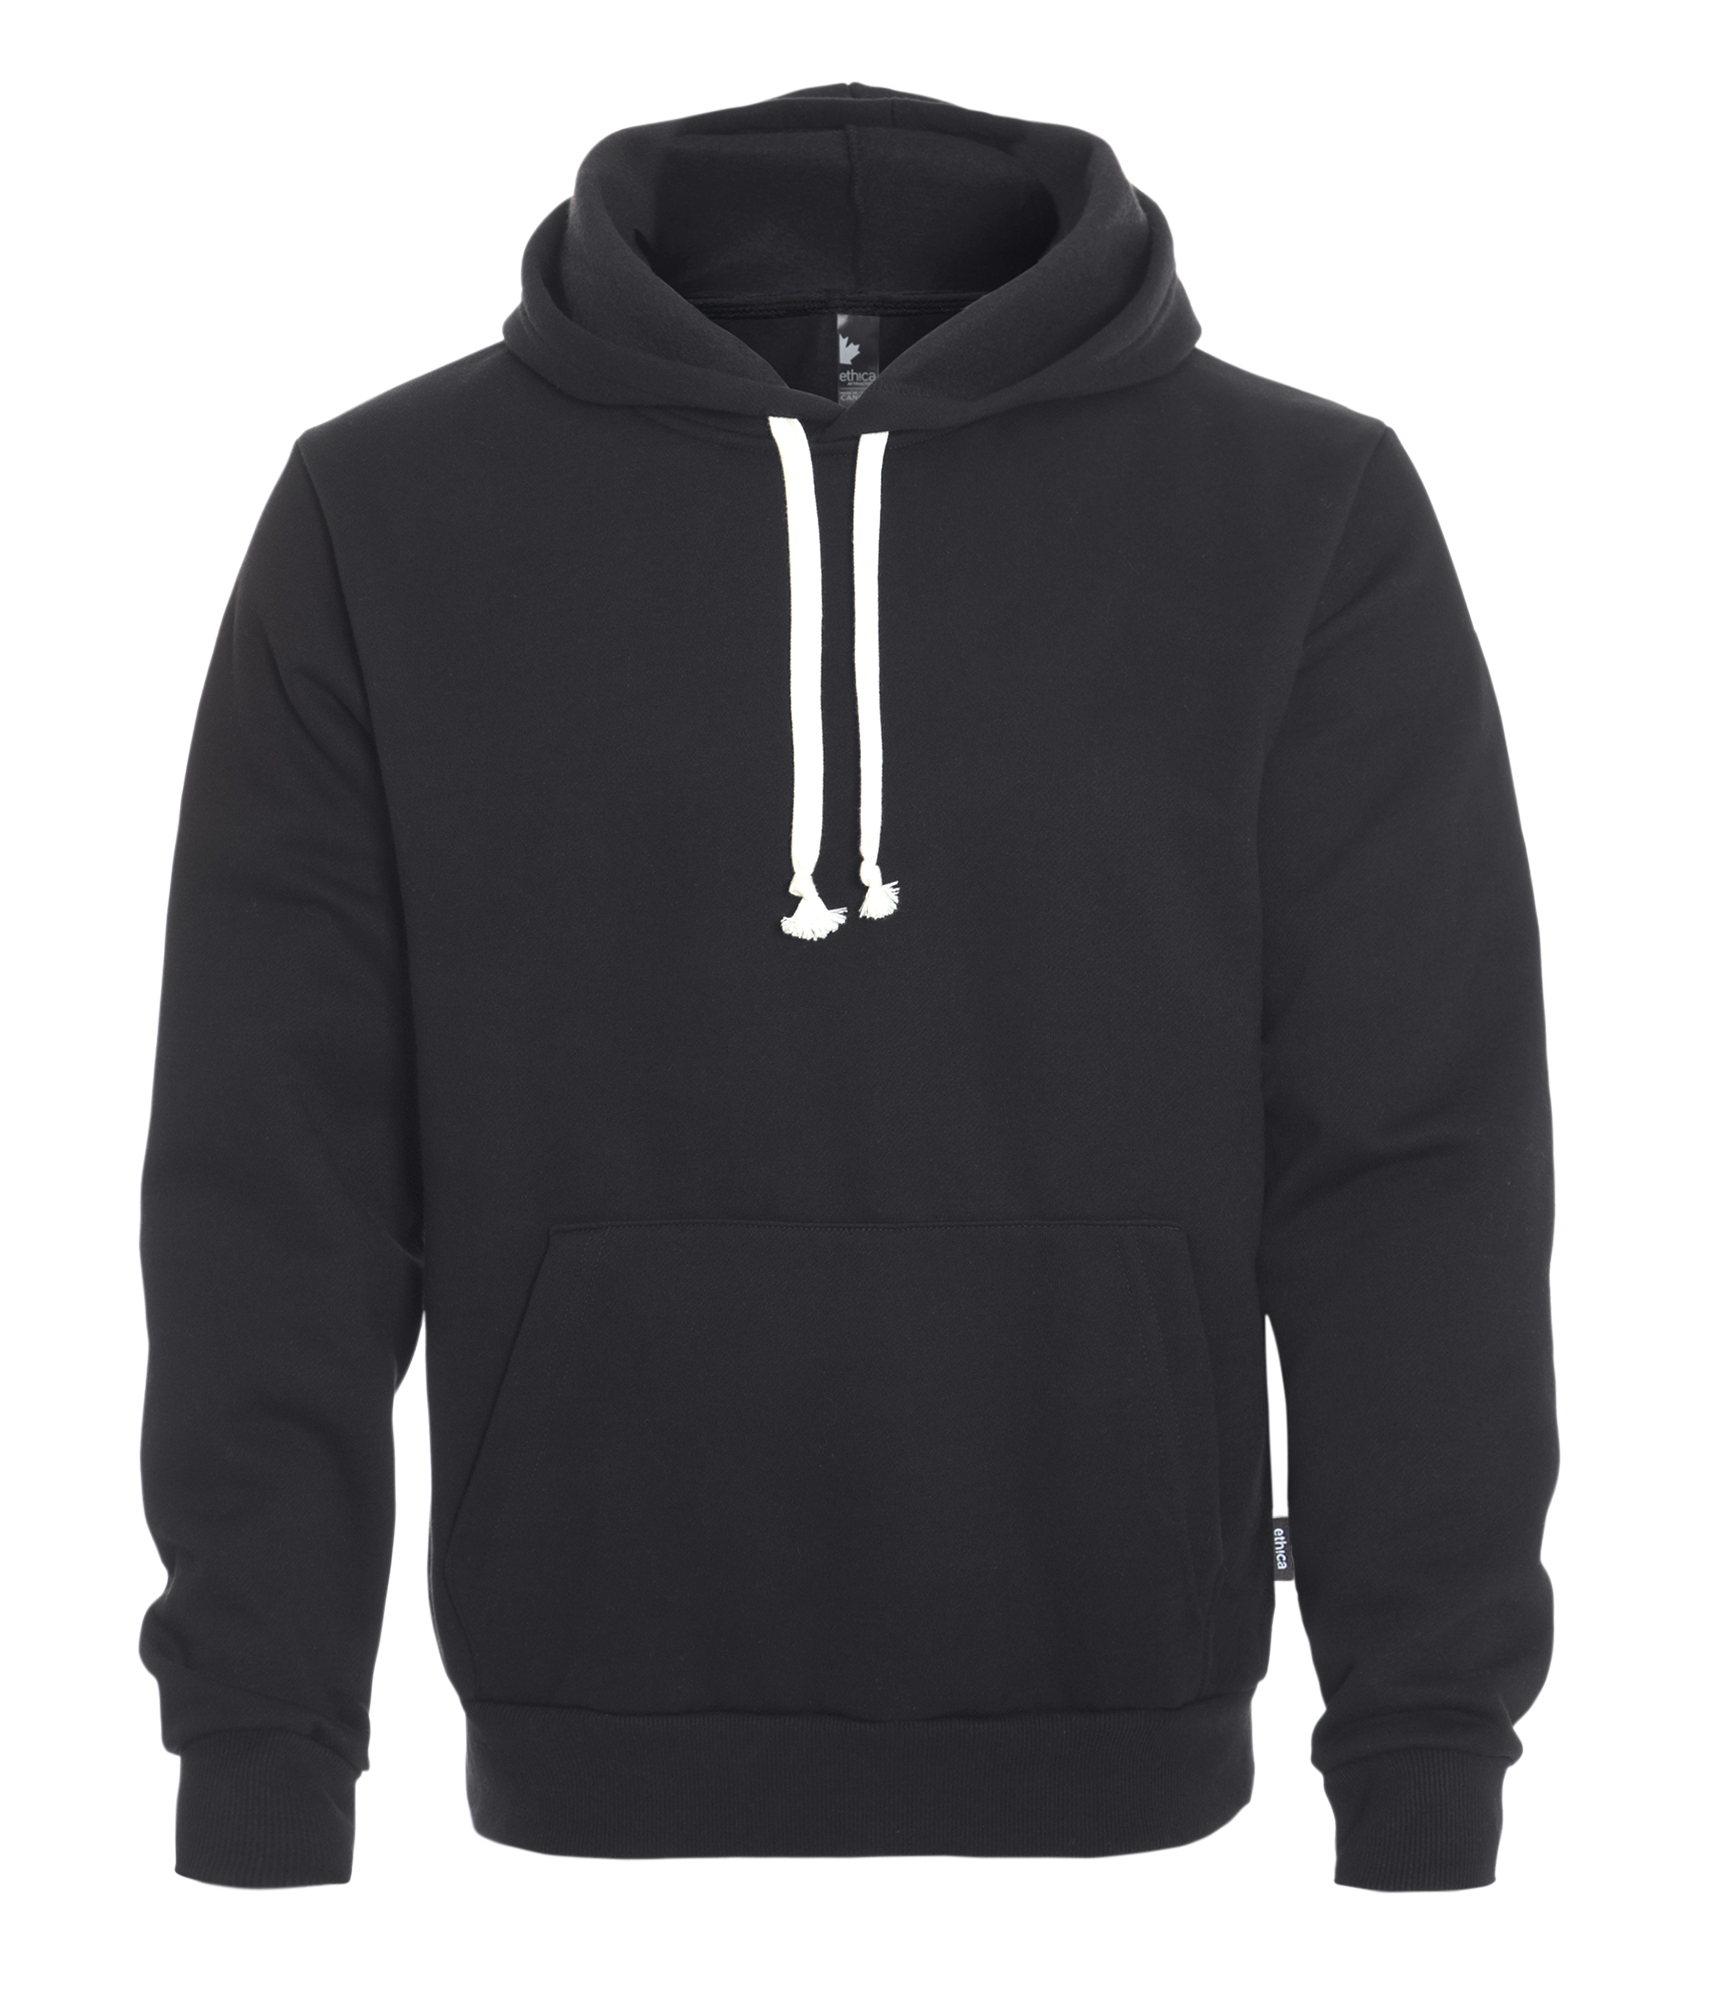 100515U - Unisex hooded sweatshirt - Attraction